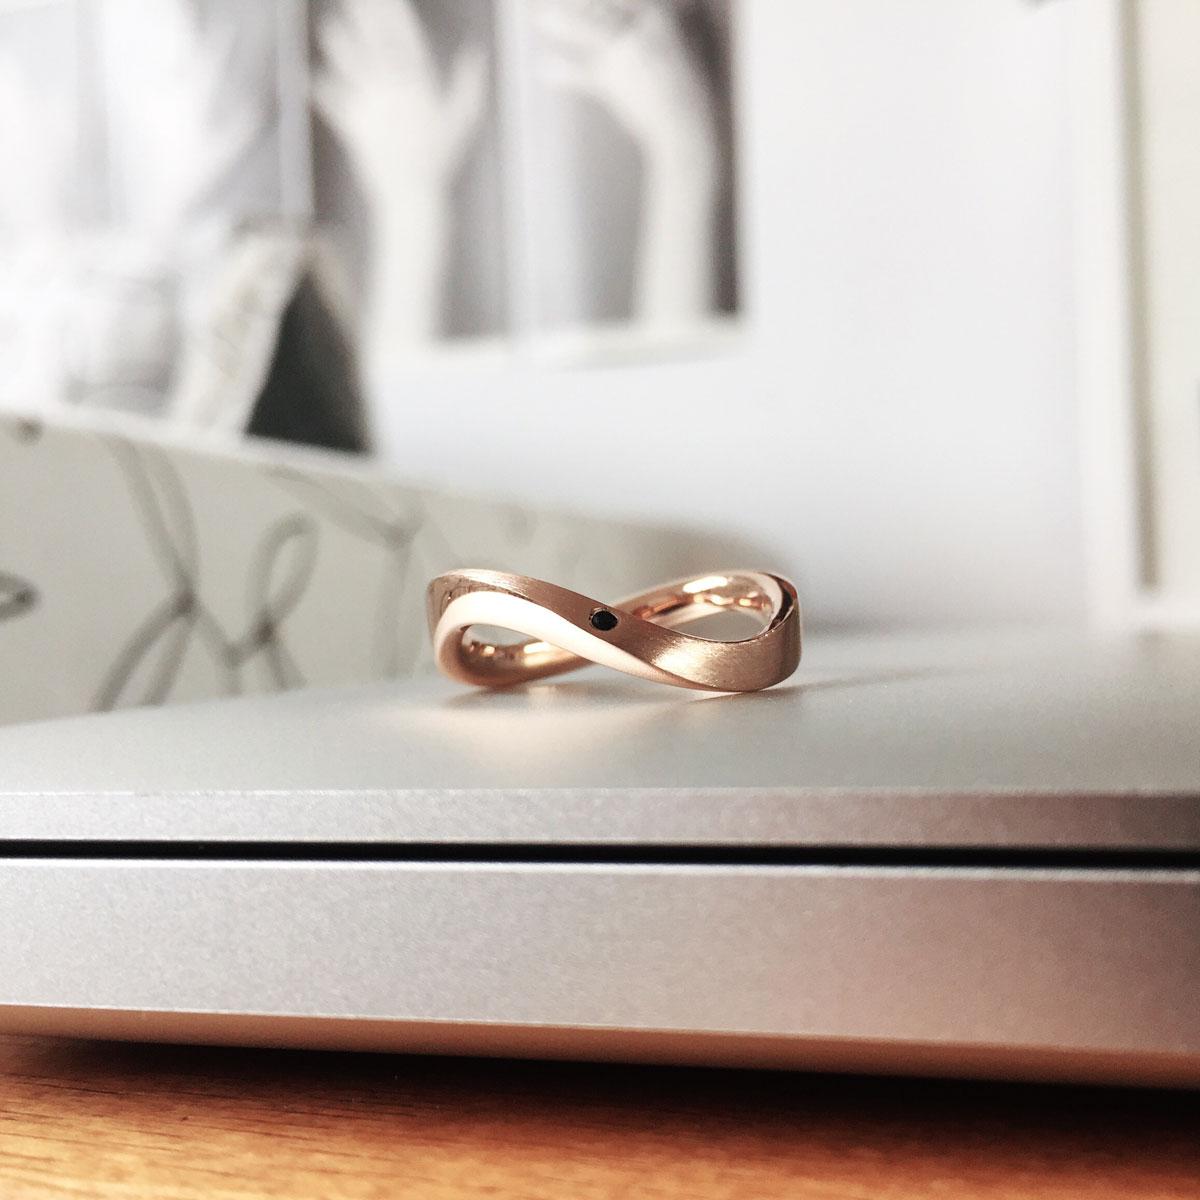 Rose gold mobius strip infinity ring, custom made by Fairina Cheng